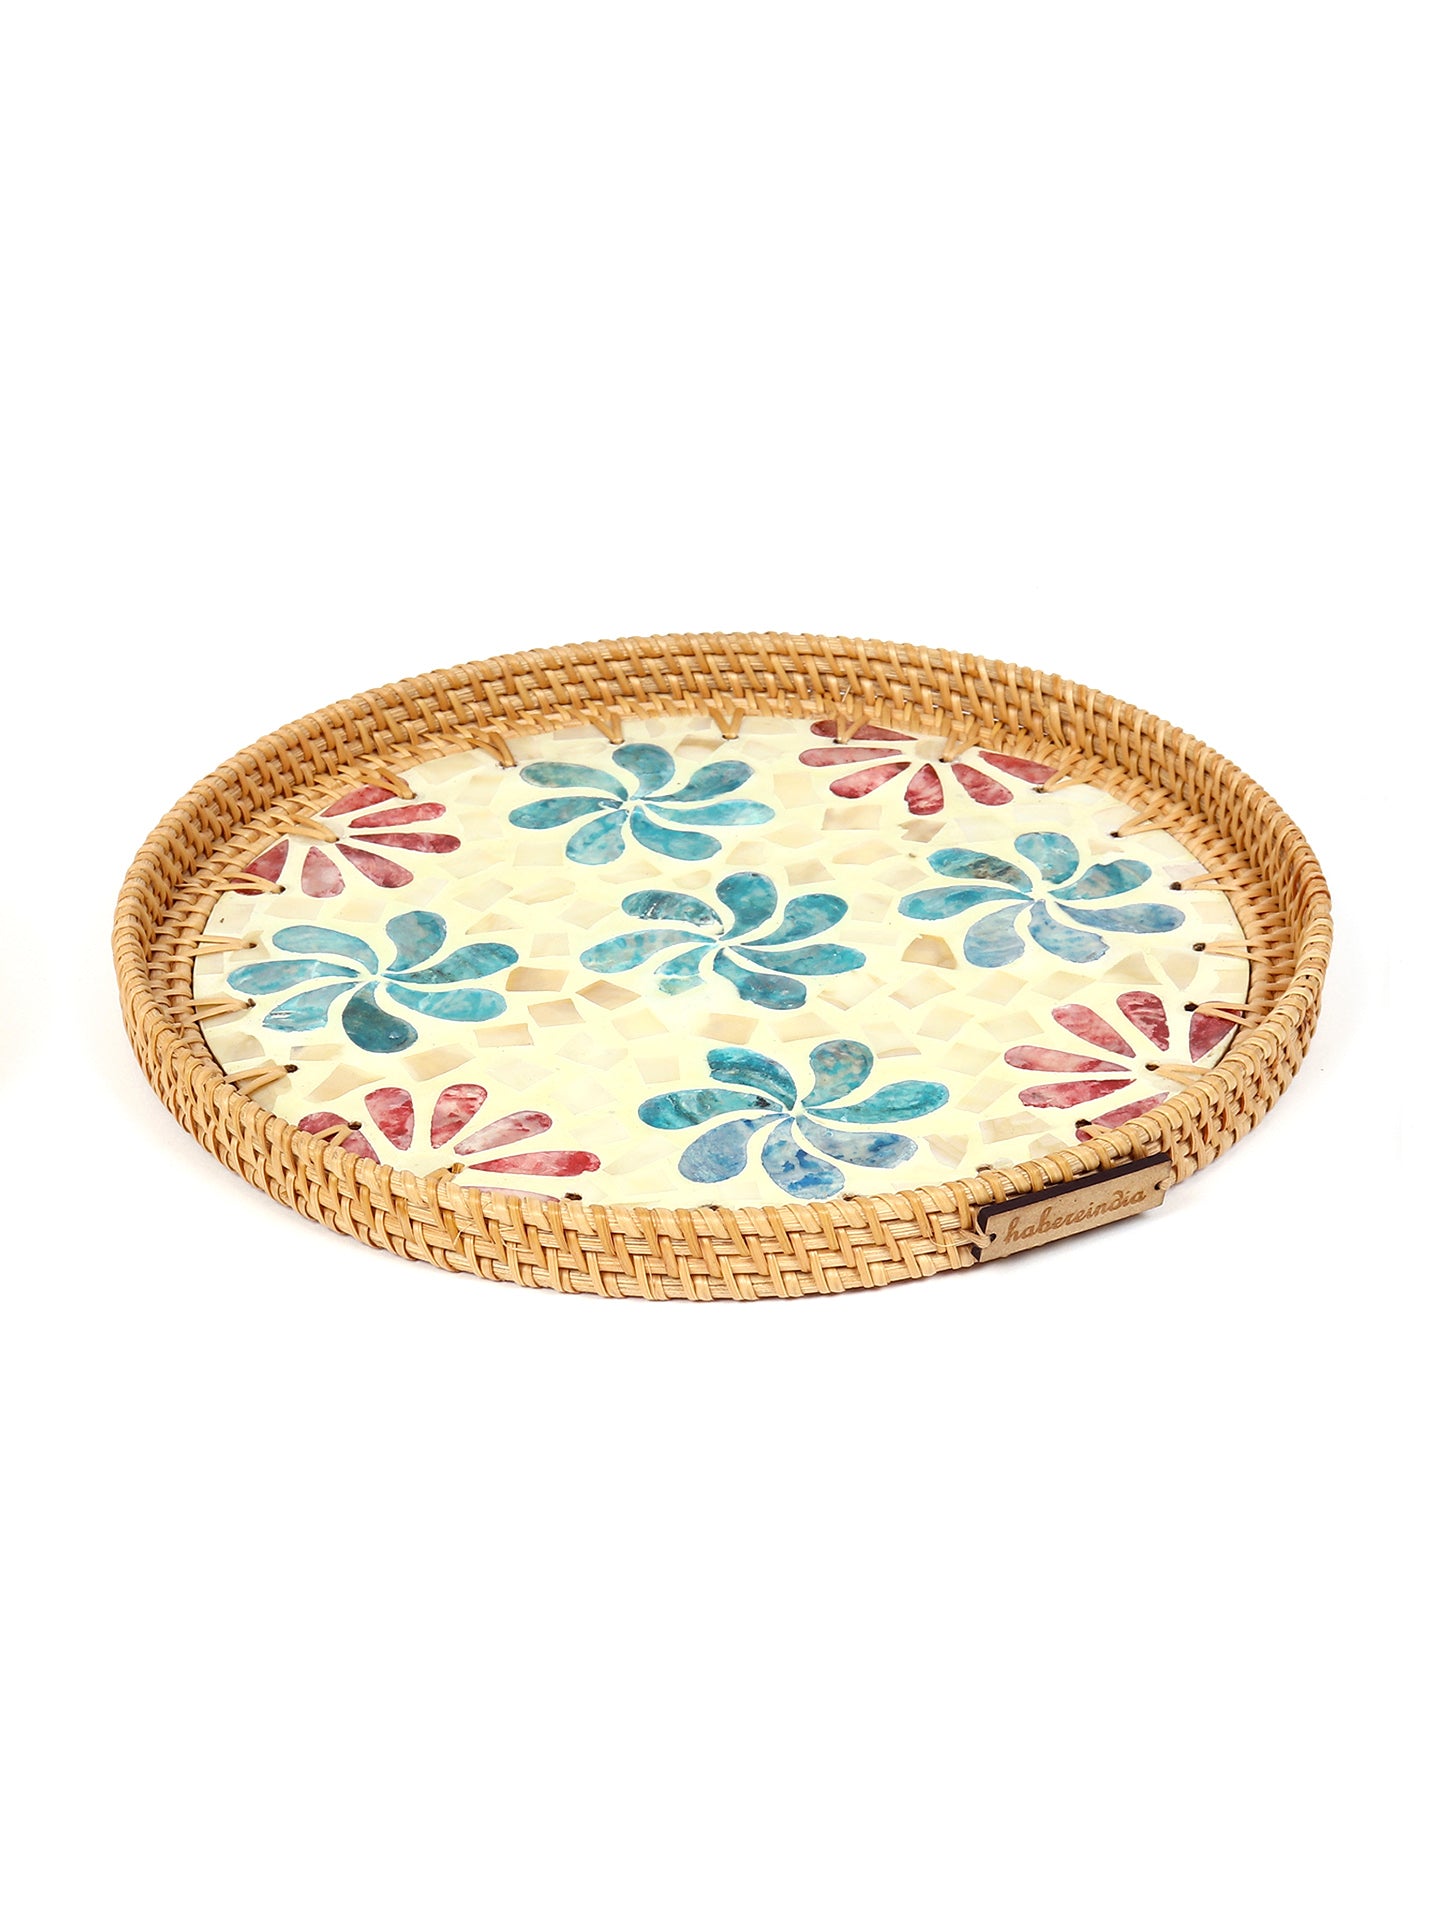  Cane Tray Round - Flower Mosaic